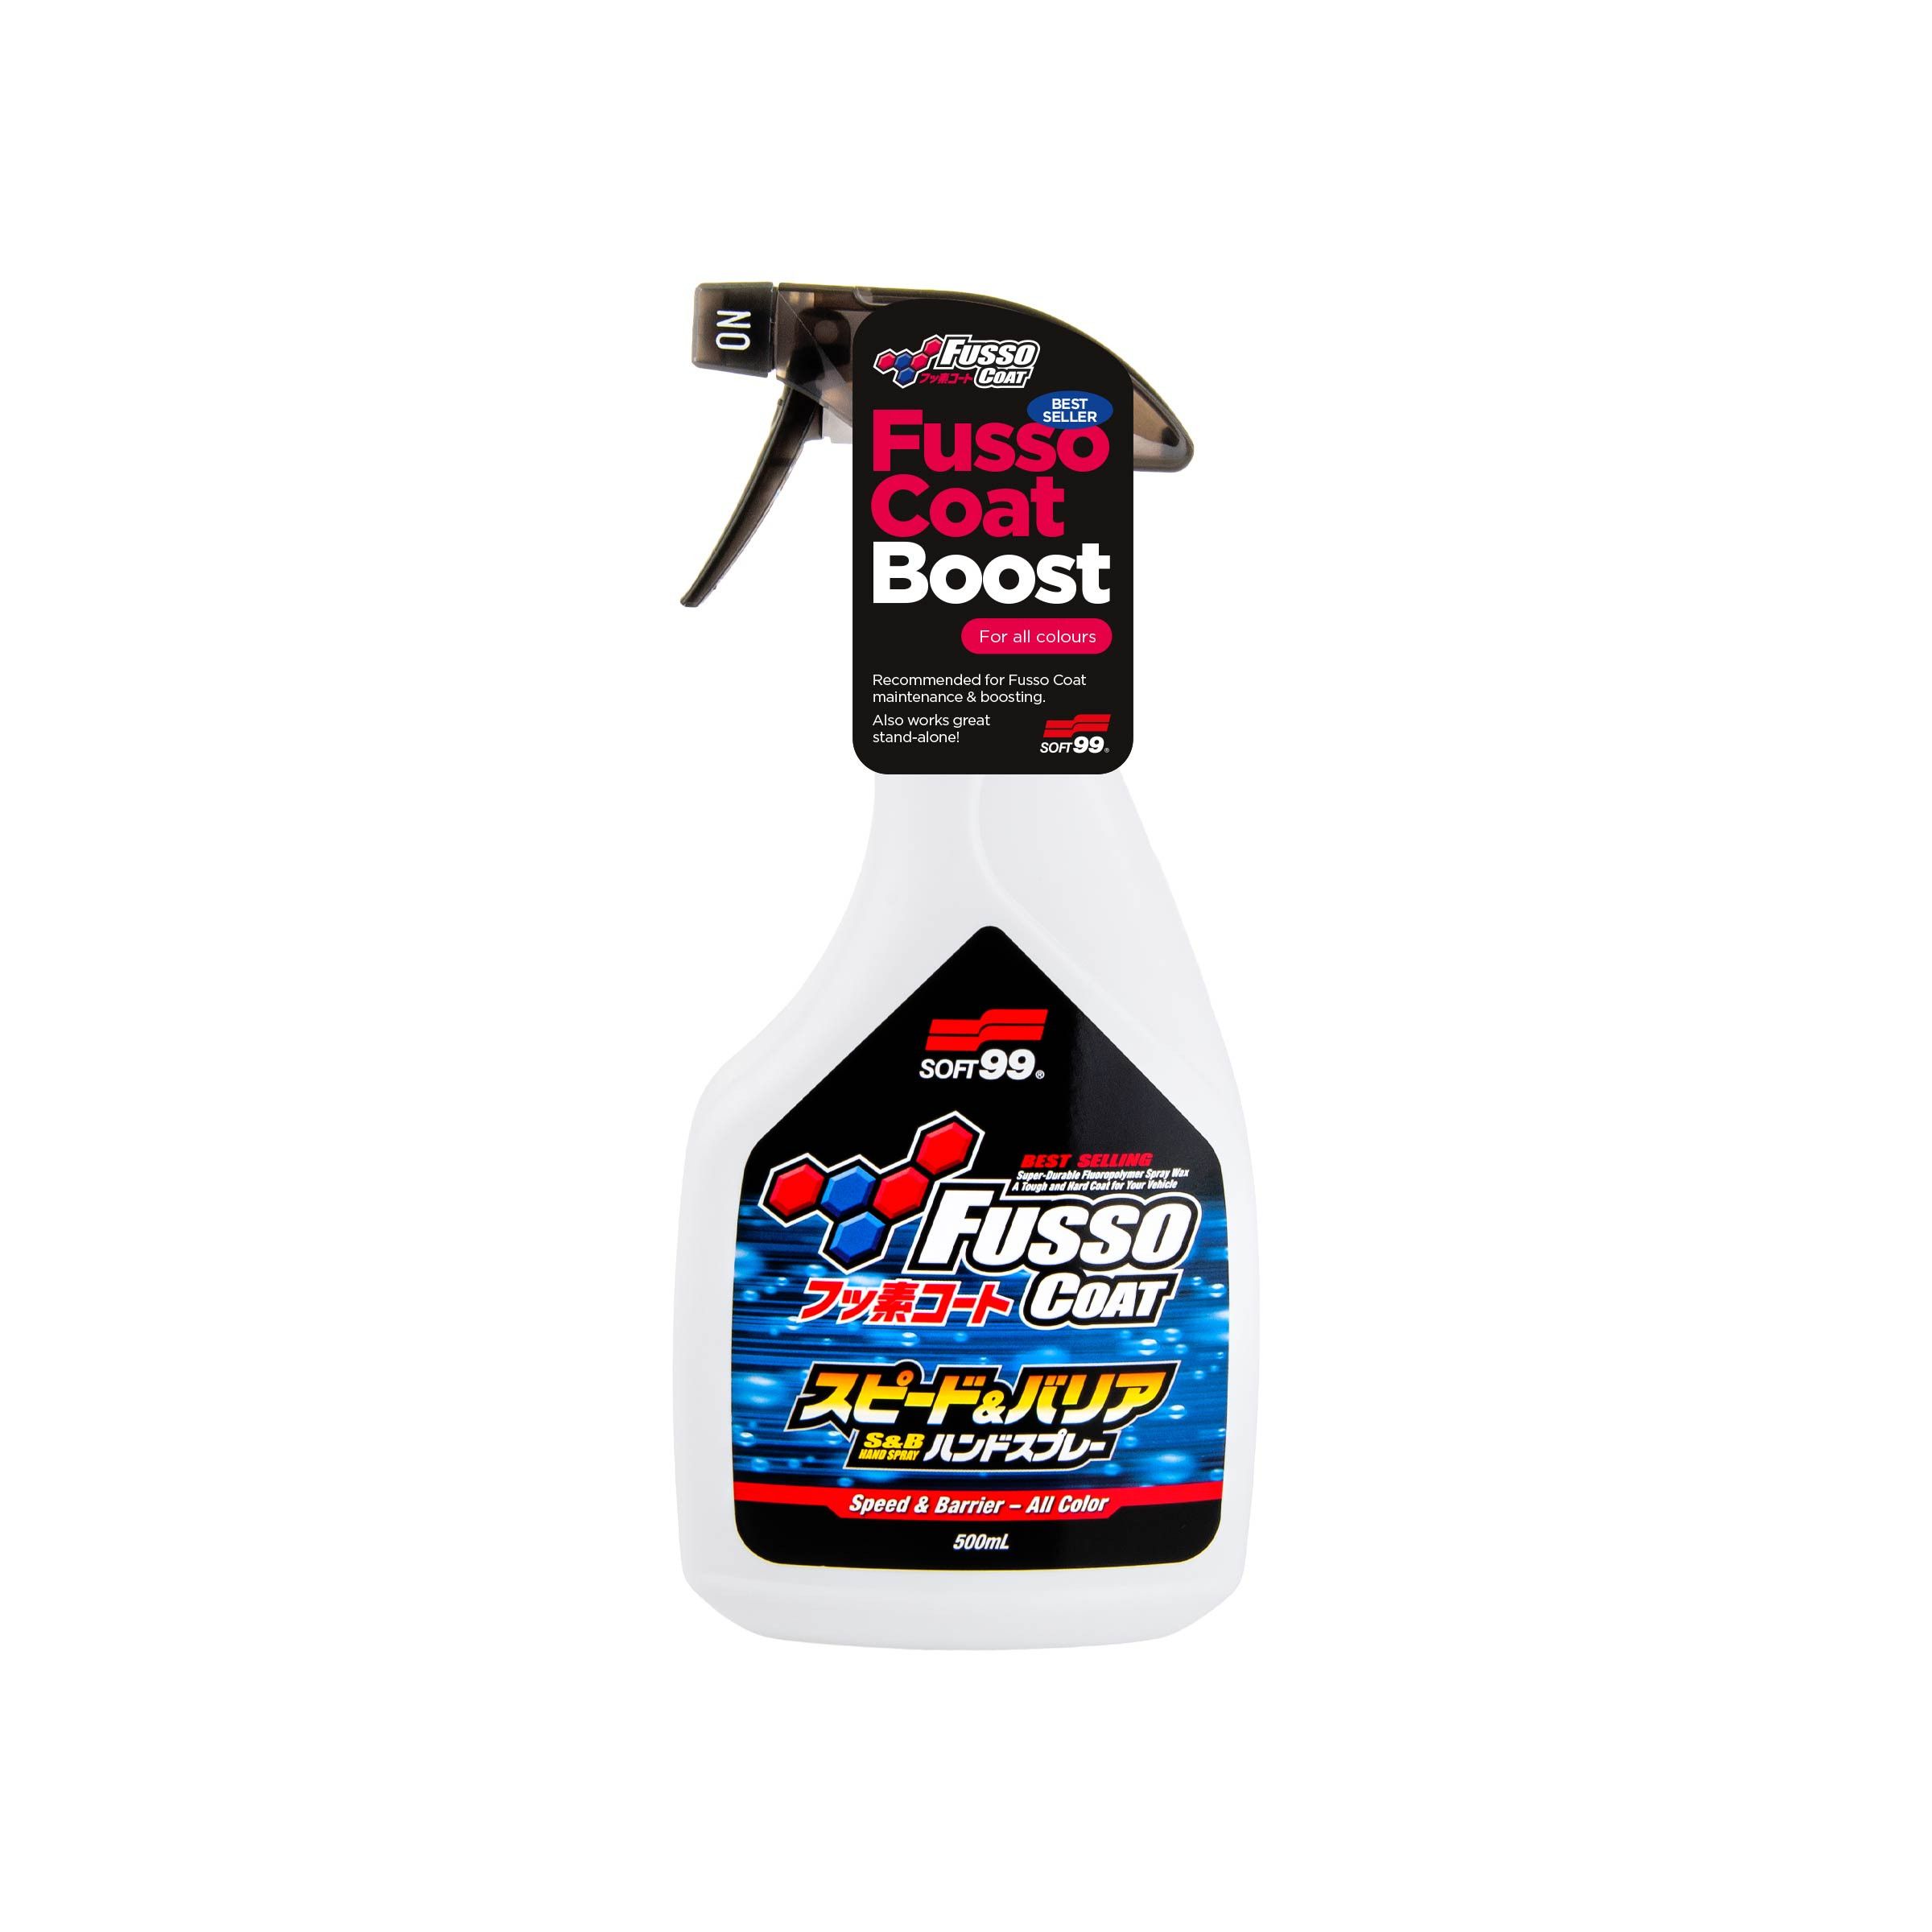 Fusso Coat Speed & Barrier, quick detailer, 500 ml - Soft99